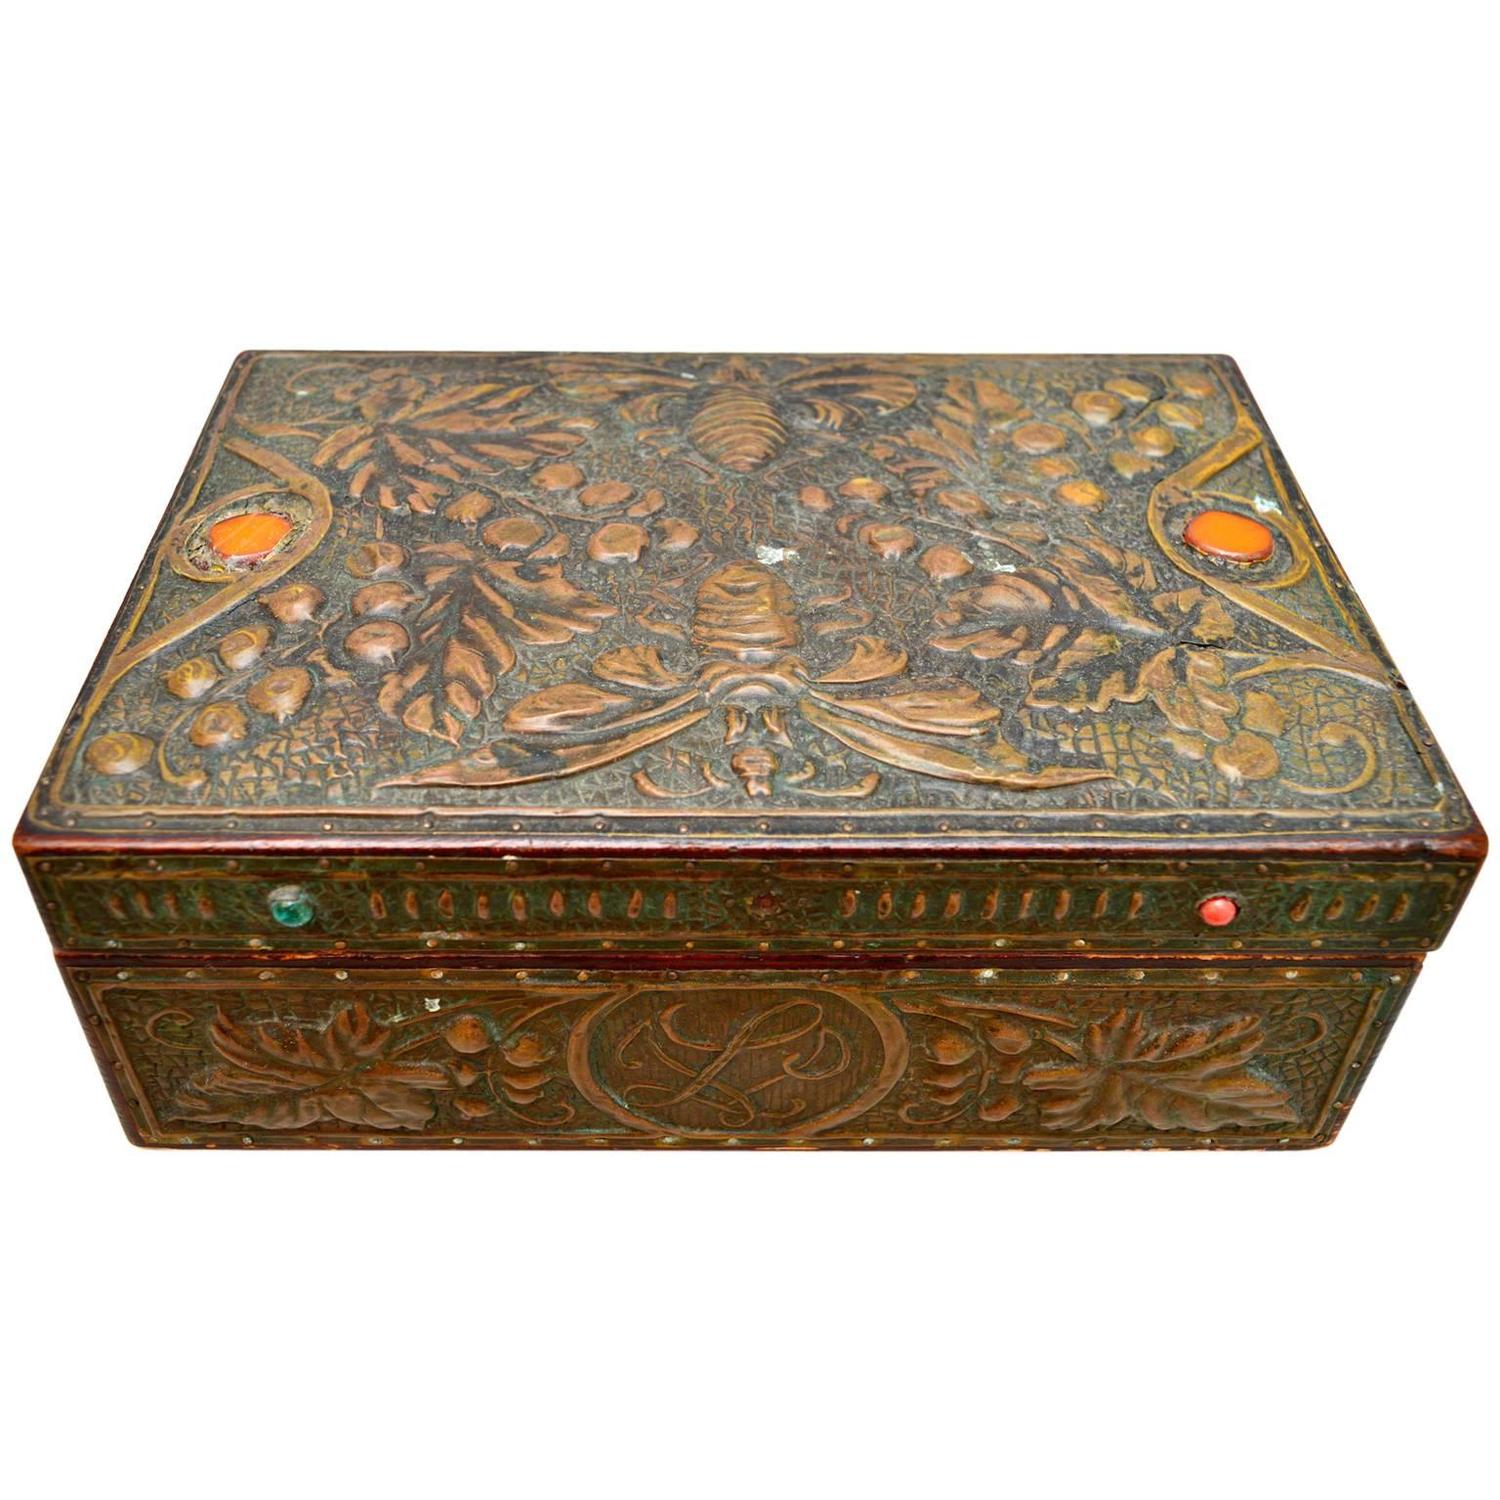 Belgian Art Nouveau Embossed Copper Box, circa 1900 at 1stdibs